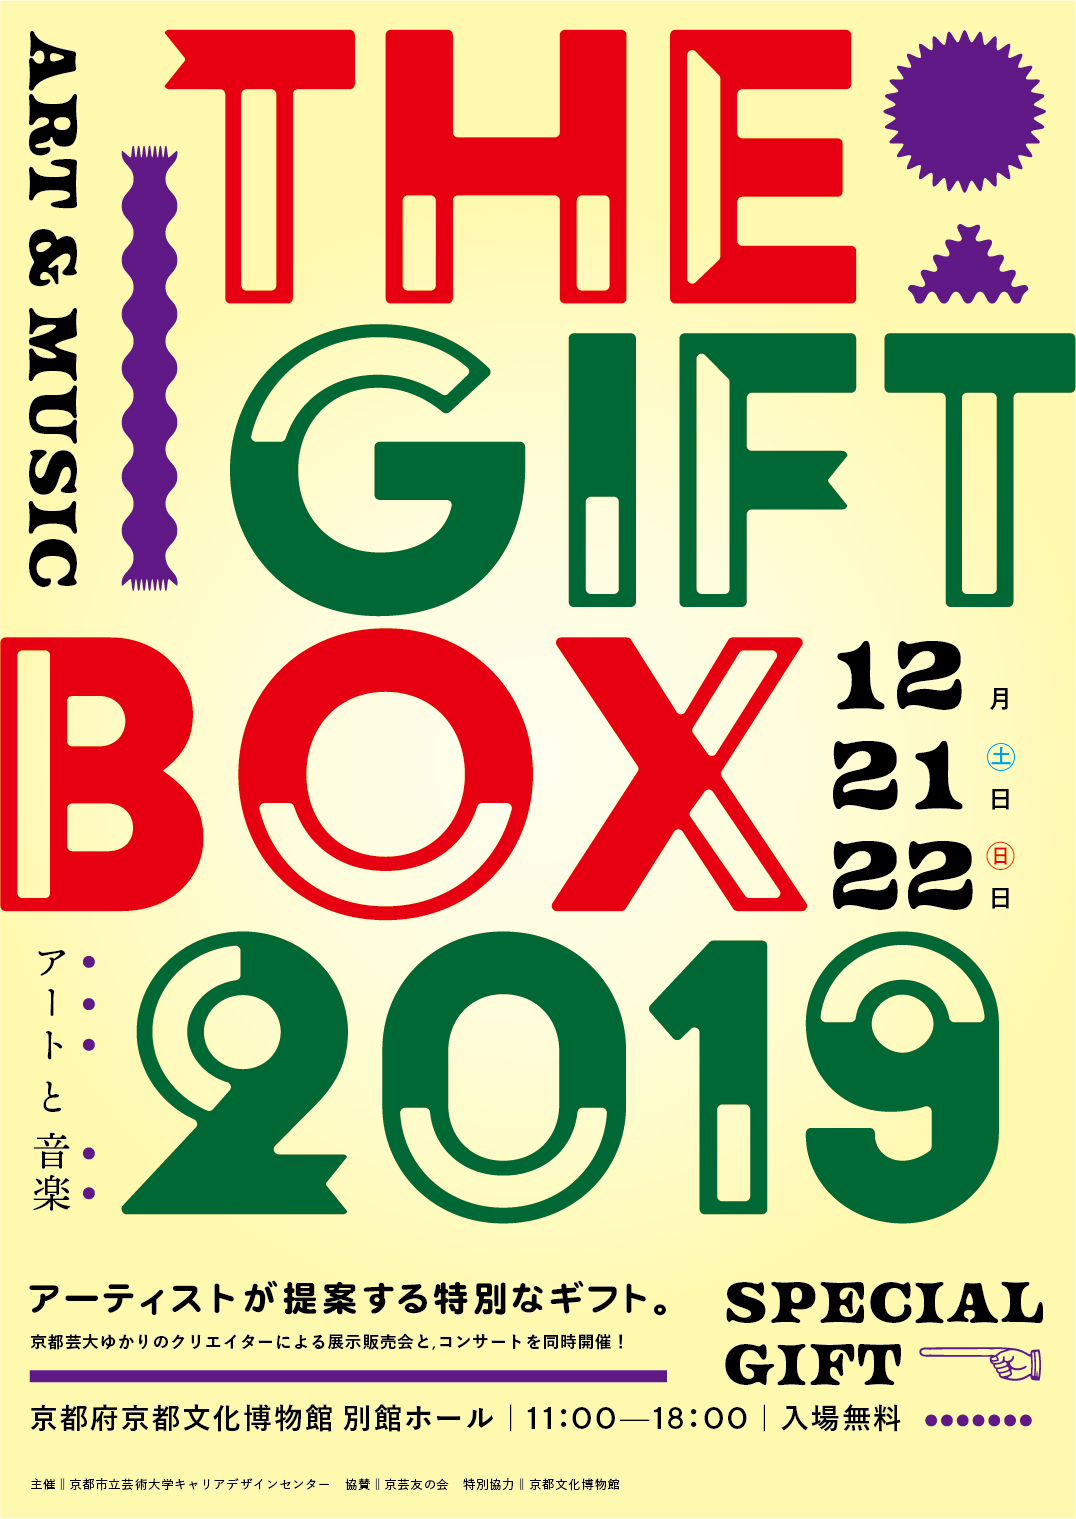 THE GIFT BOX 2019　アーティストが提案する特別なギフト。出演者情報